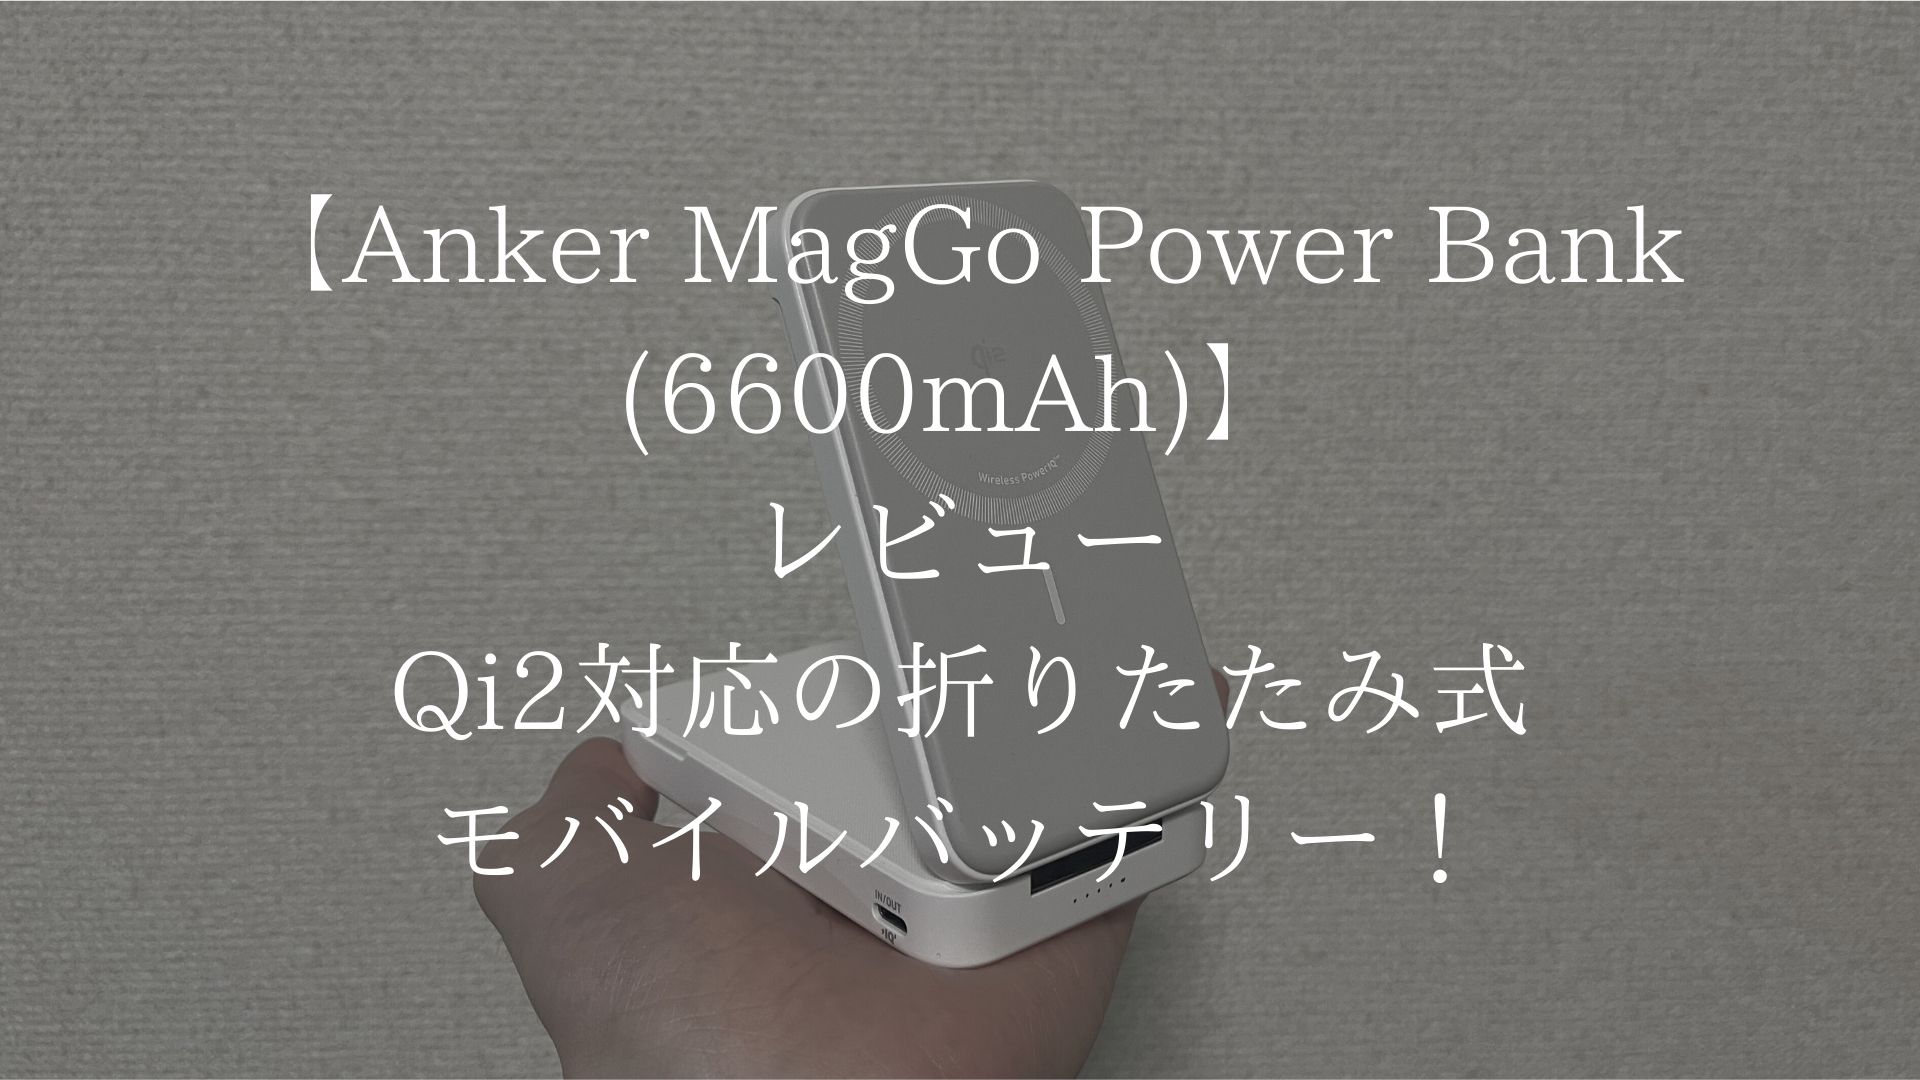 Anker MagGo Power Bank (6600mAh)のアイキャッチ画像